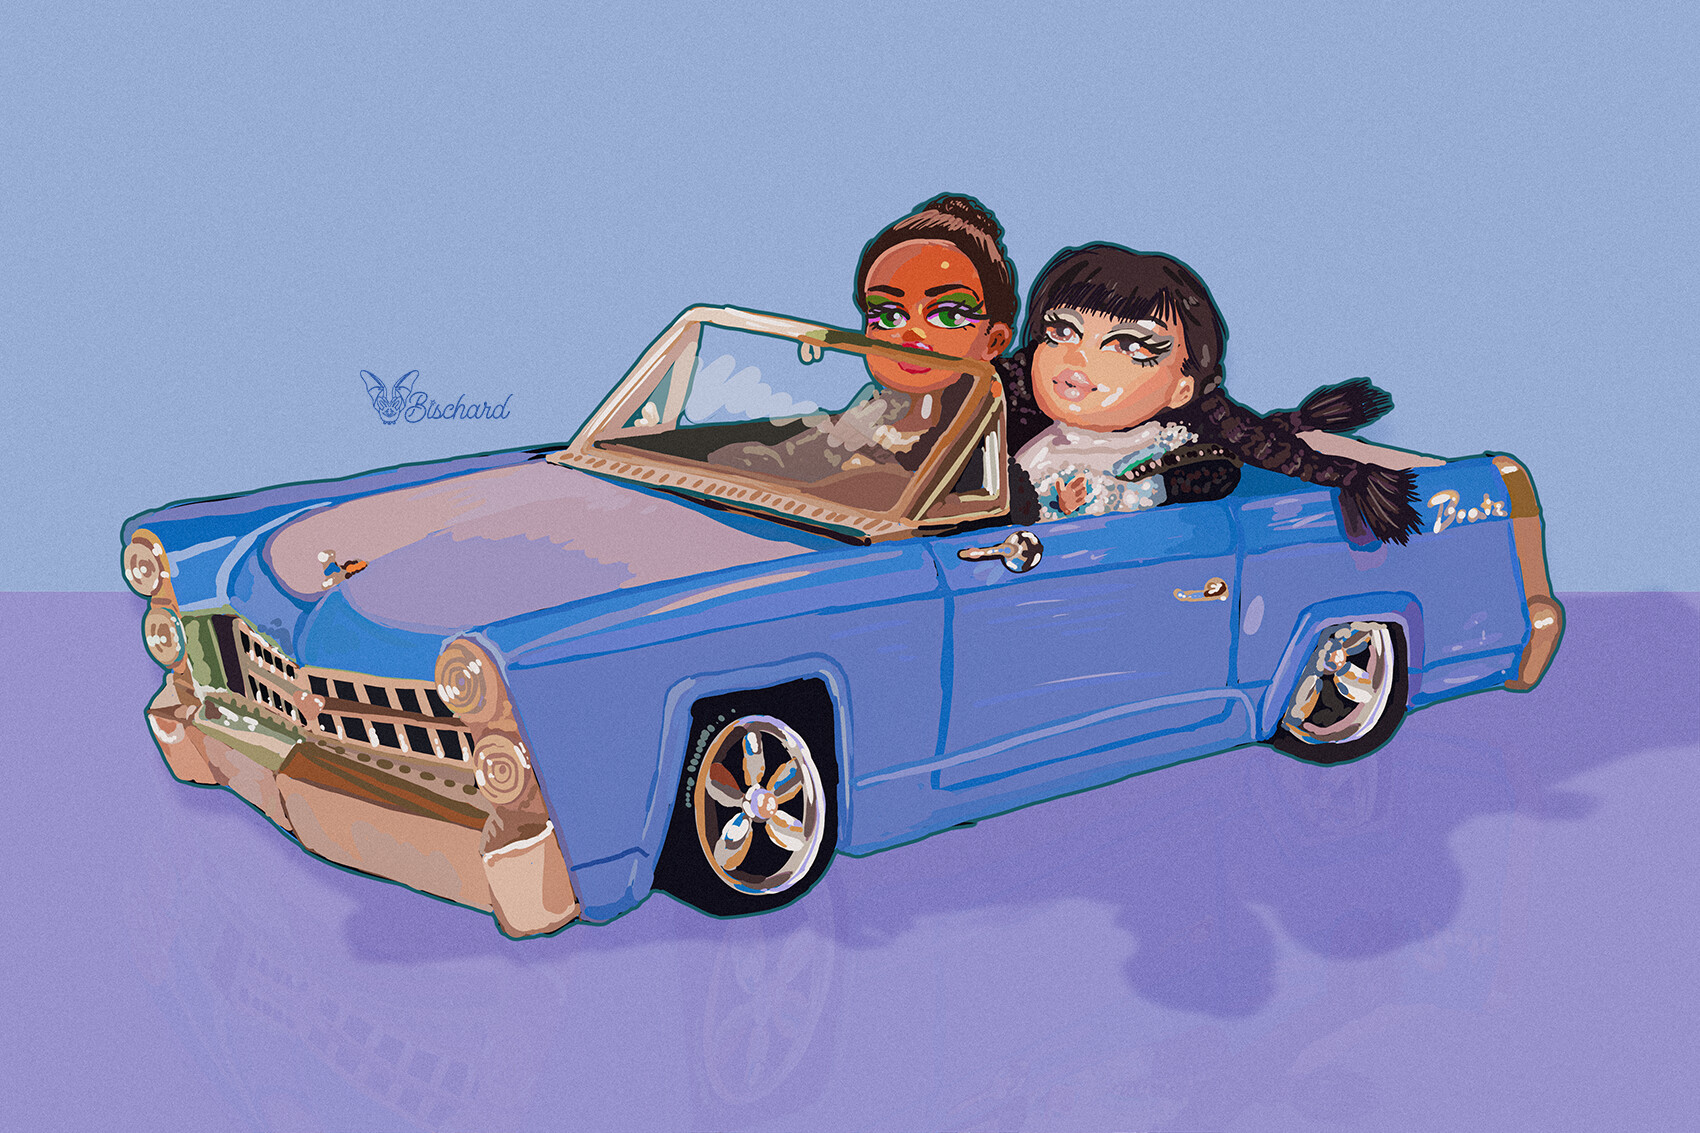 Posible Tutor Departamento ArtStation - 2002 BRATZ Cadillac Cruiser Car (blue) with Jade and Sasha  Still Life